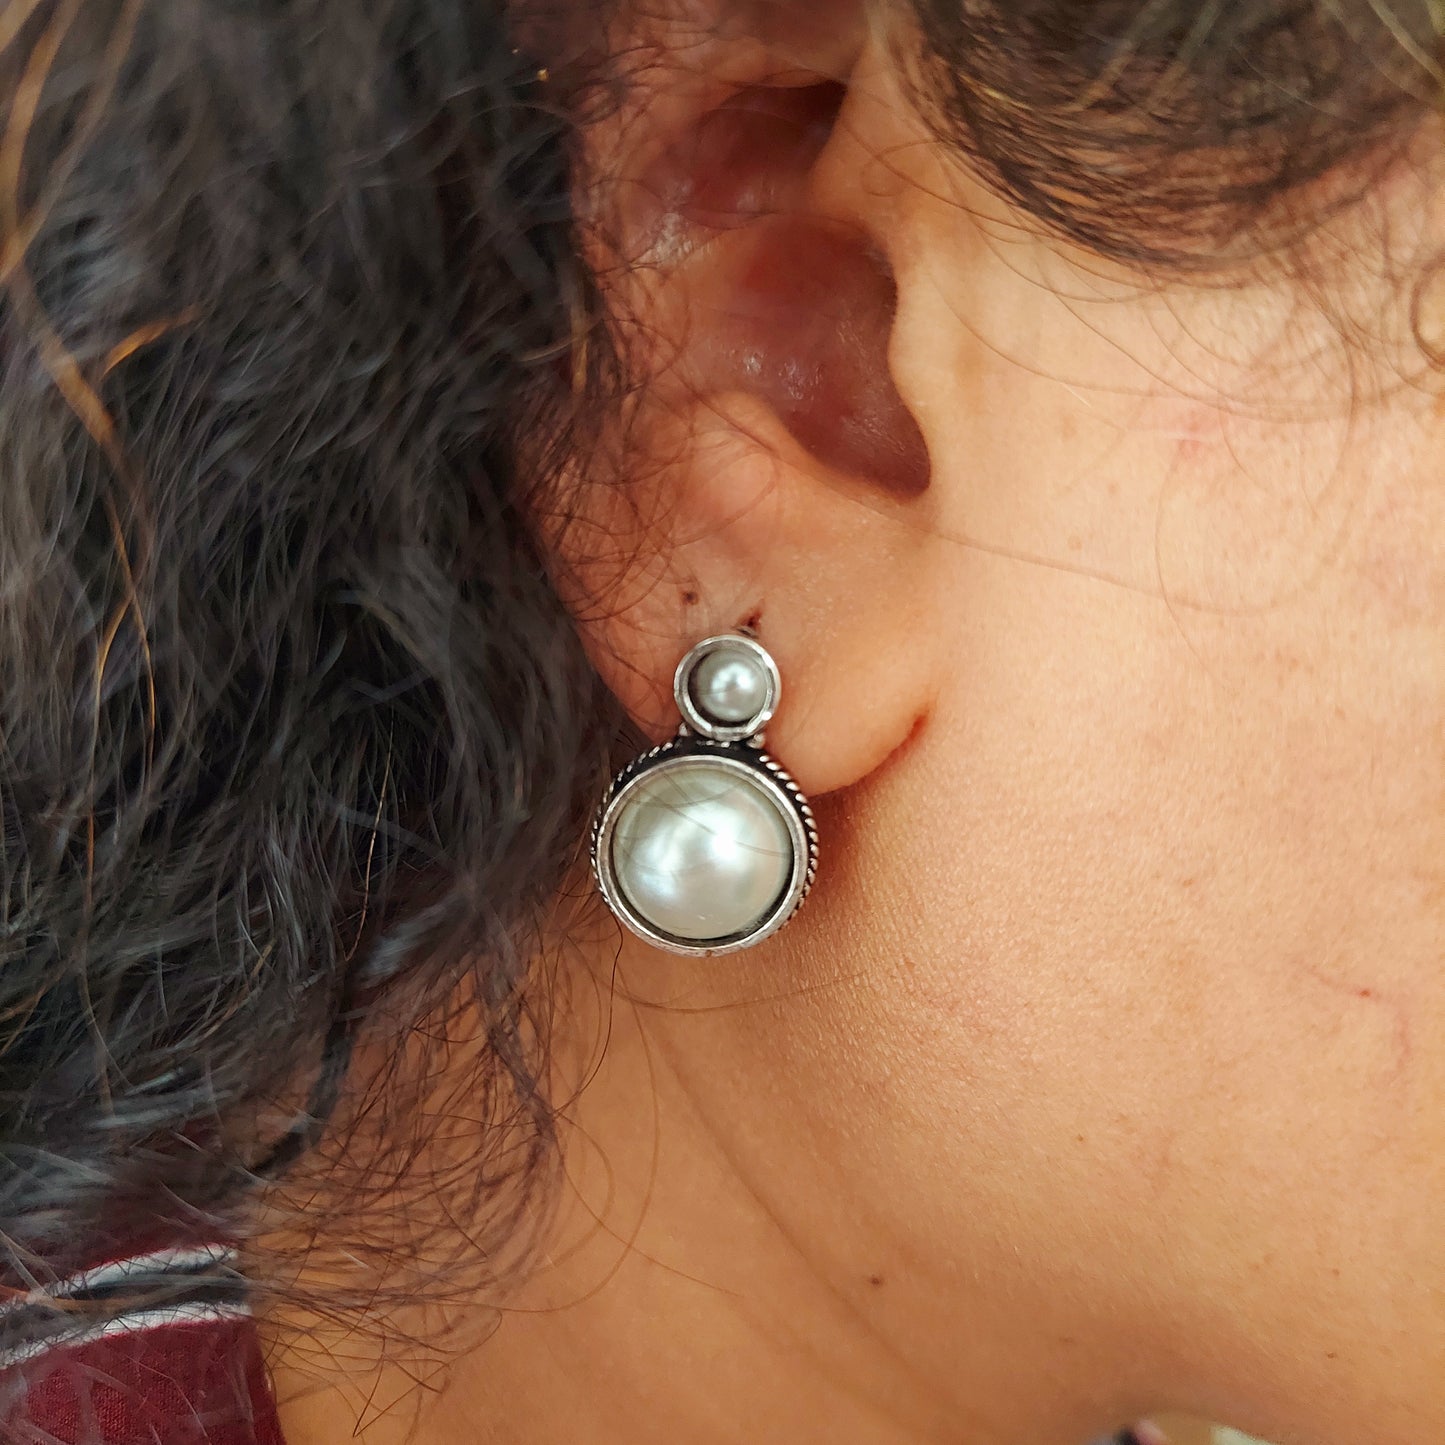 Circular Pearl Ear Stud